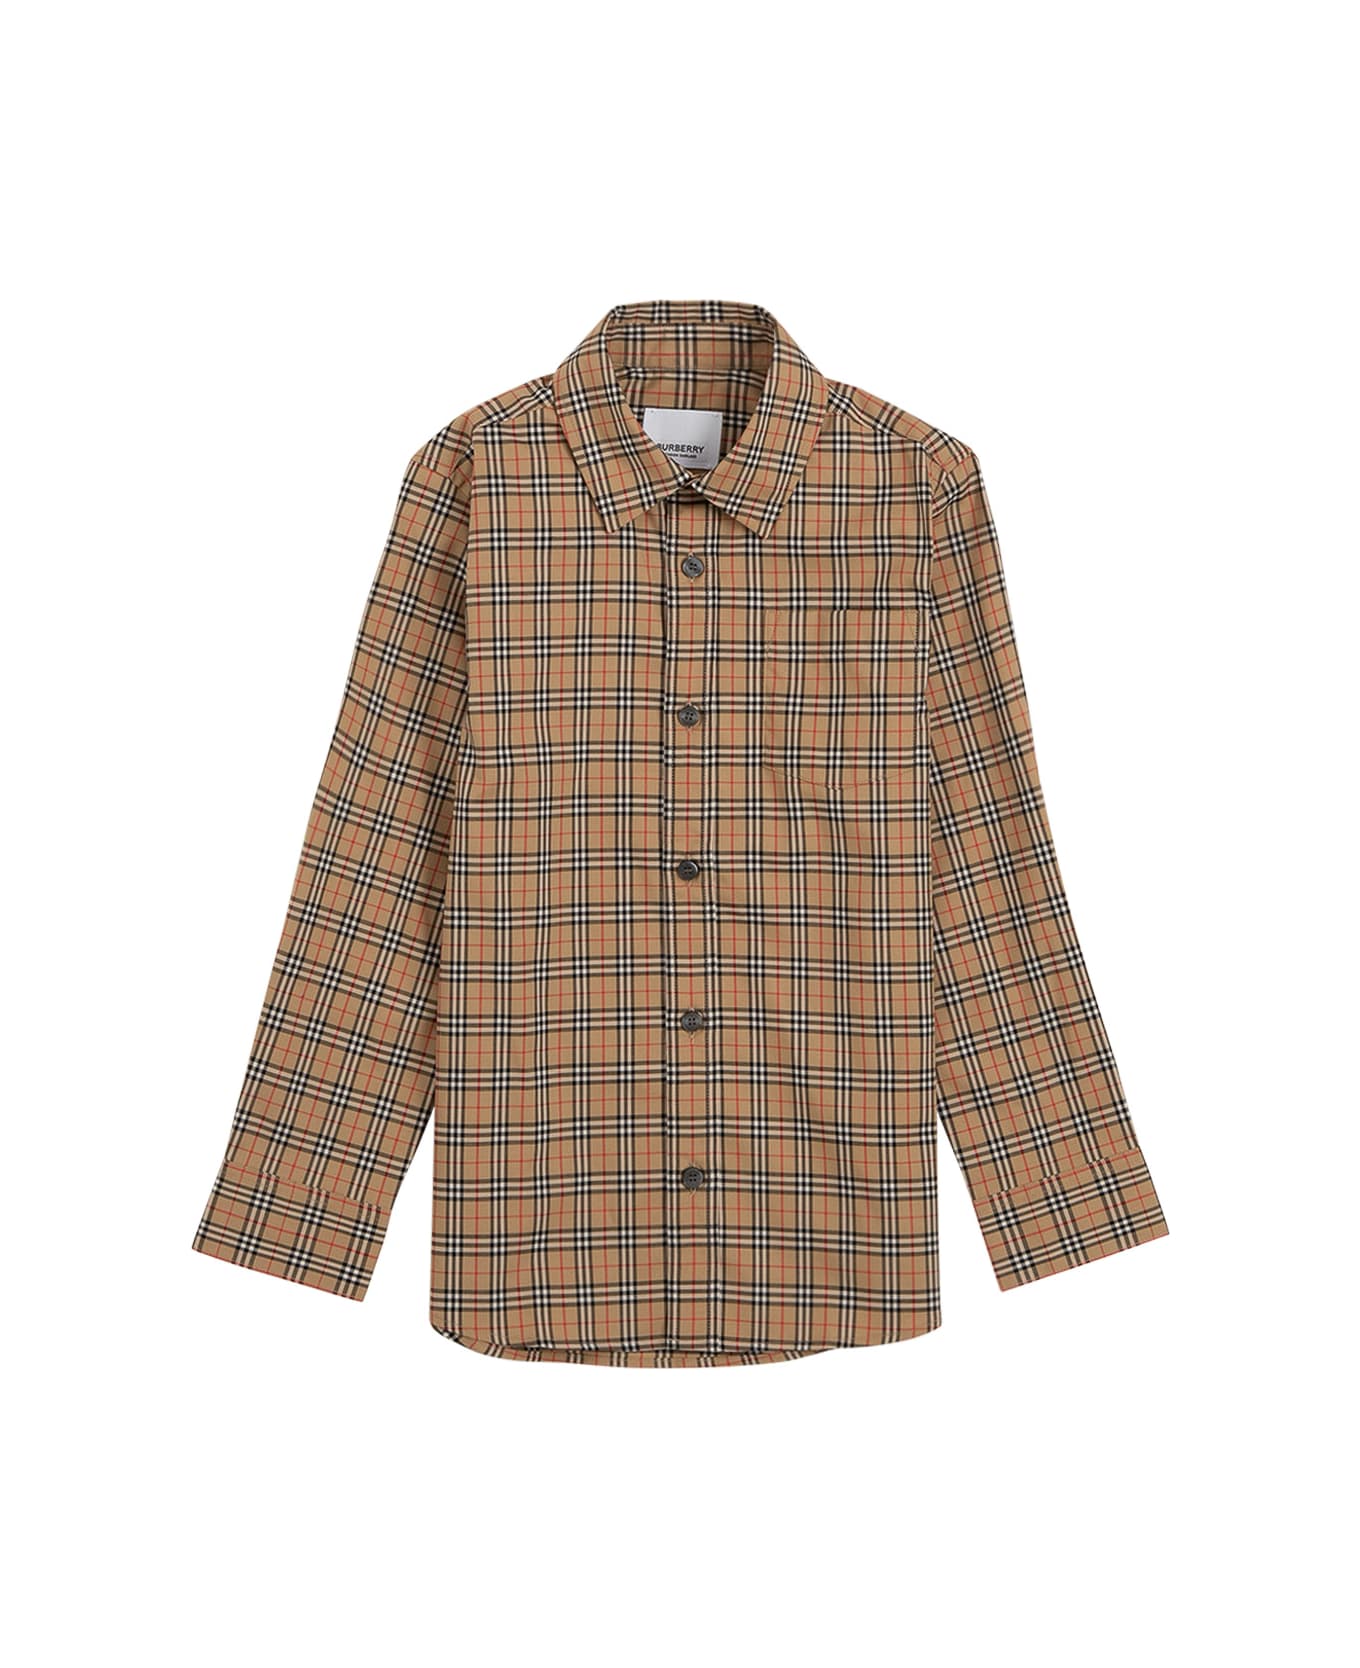 Burberry Vintage Check Cotton Poplin Shirt - Beige